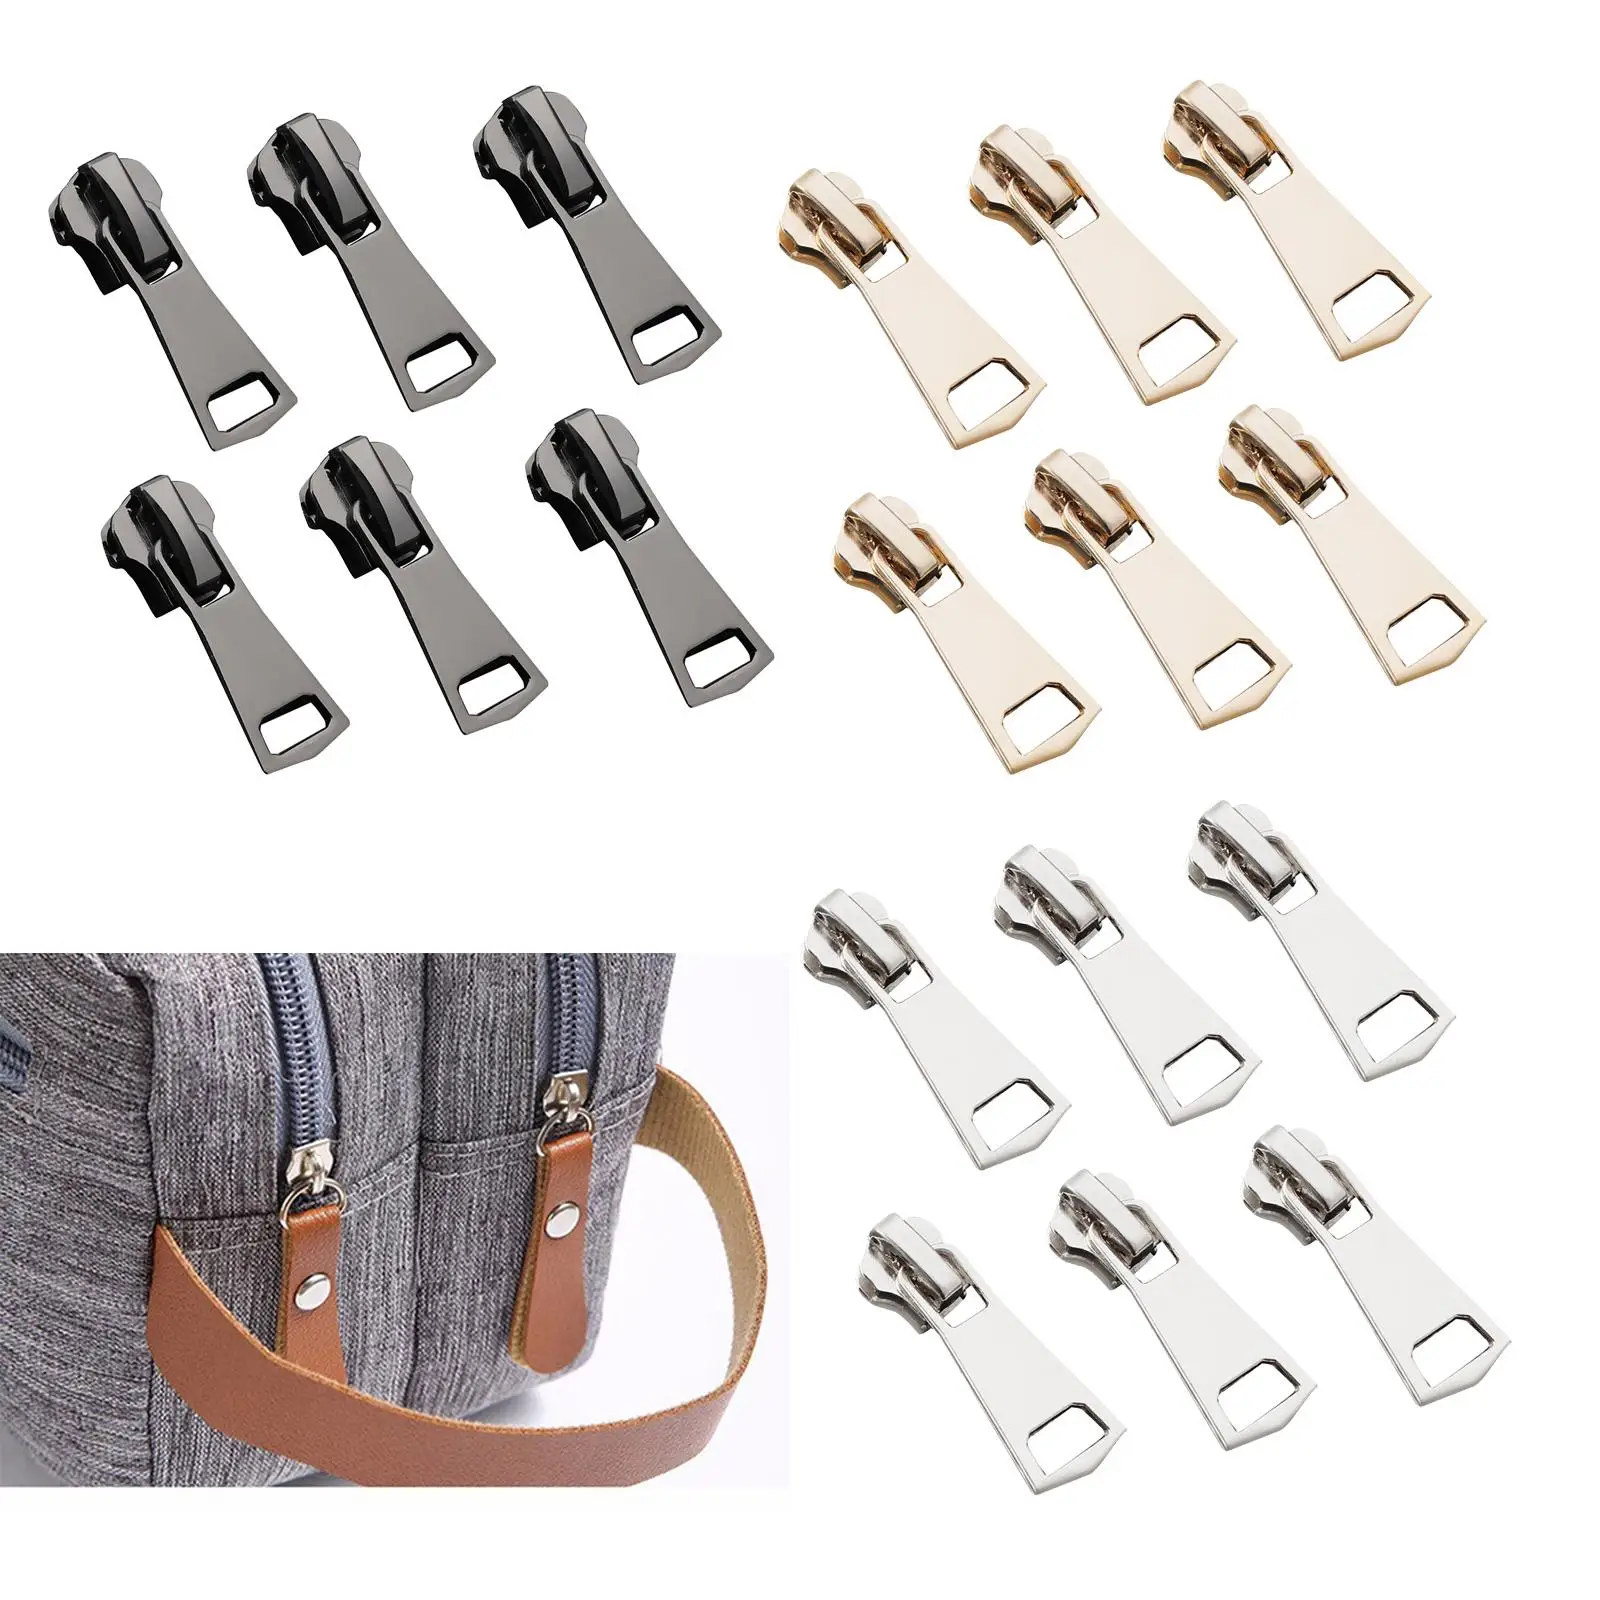 6x Universal Zipper Repair Kit Instant Replacement Zipper Slider Removable for Fixing Coats Textiles Duffle Bag Shoe Tent